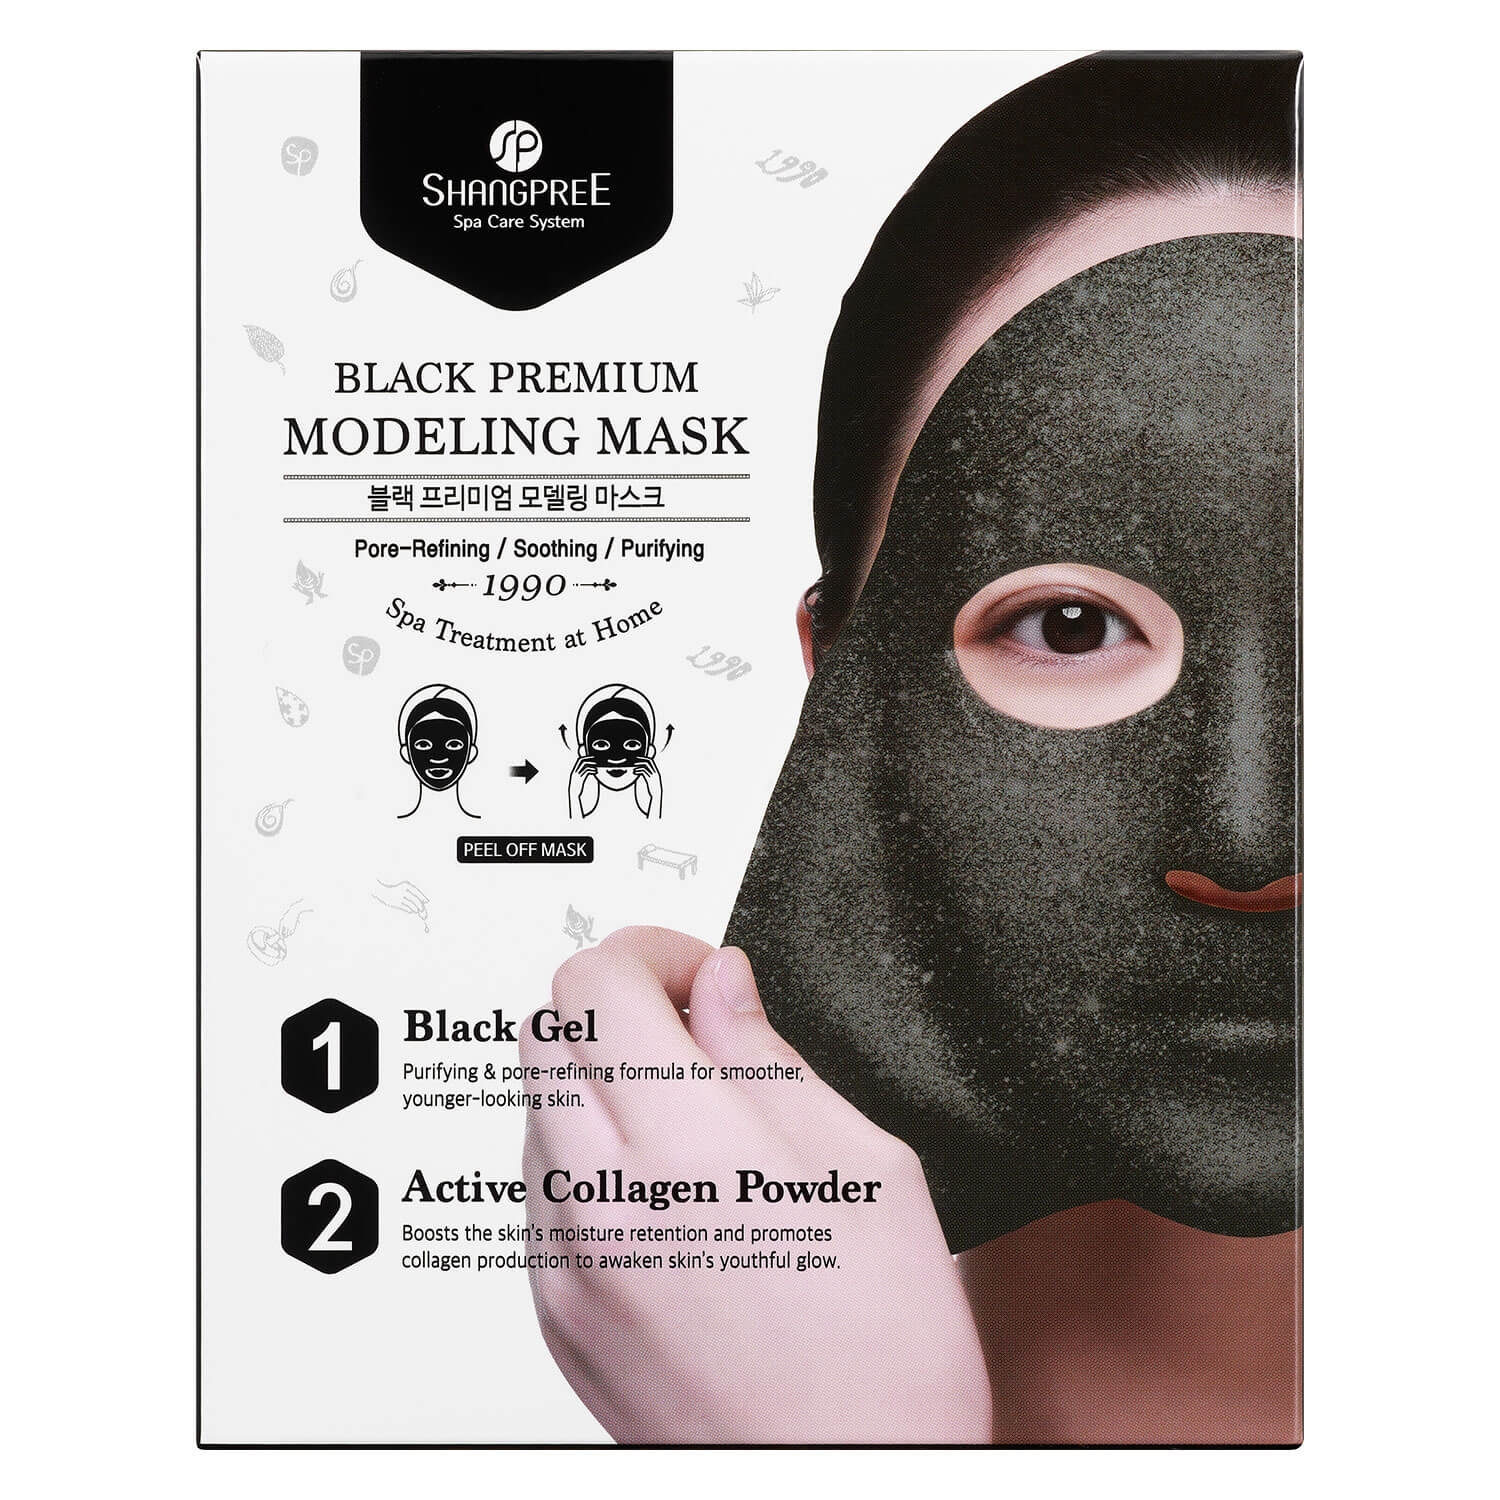 Produktbild von SHANGPREE - Black Premium Modeling Mask